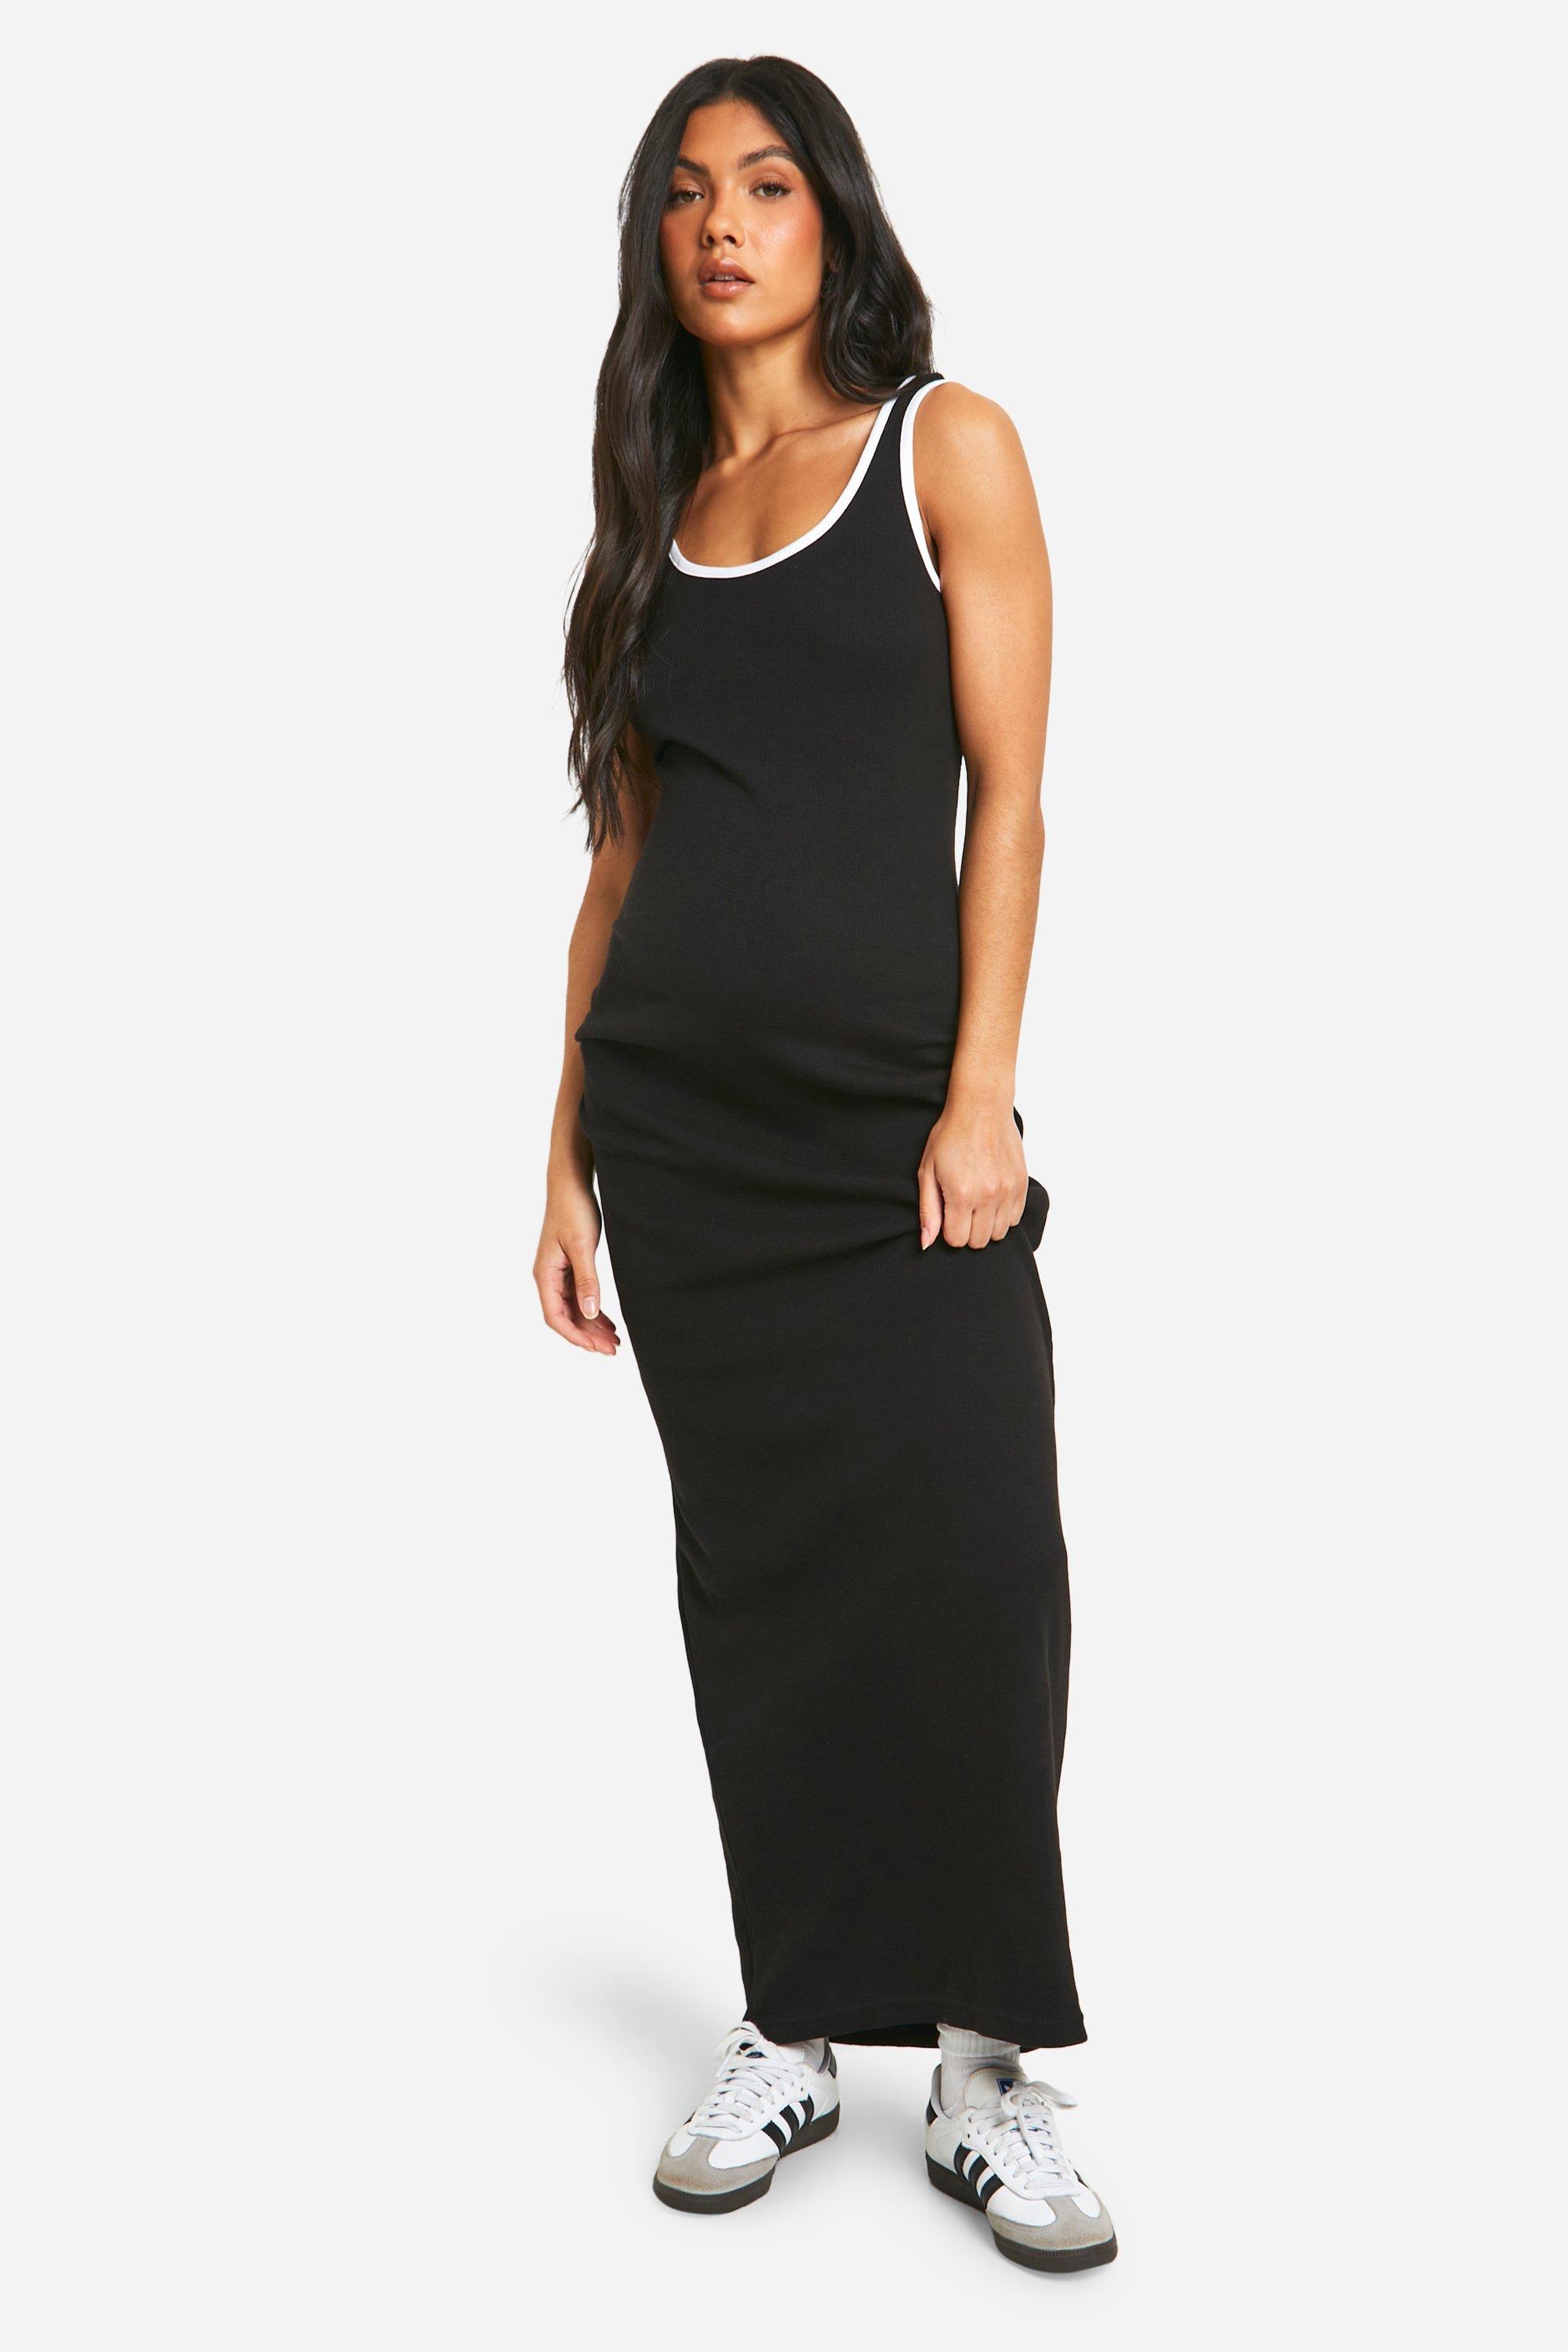 Boohoo Maternity Contrast Binding Scoop Neck Maxi Dress, Black